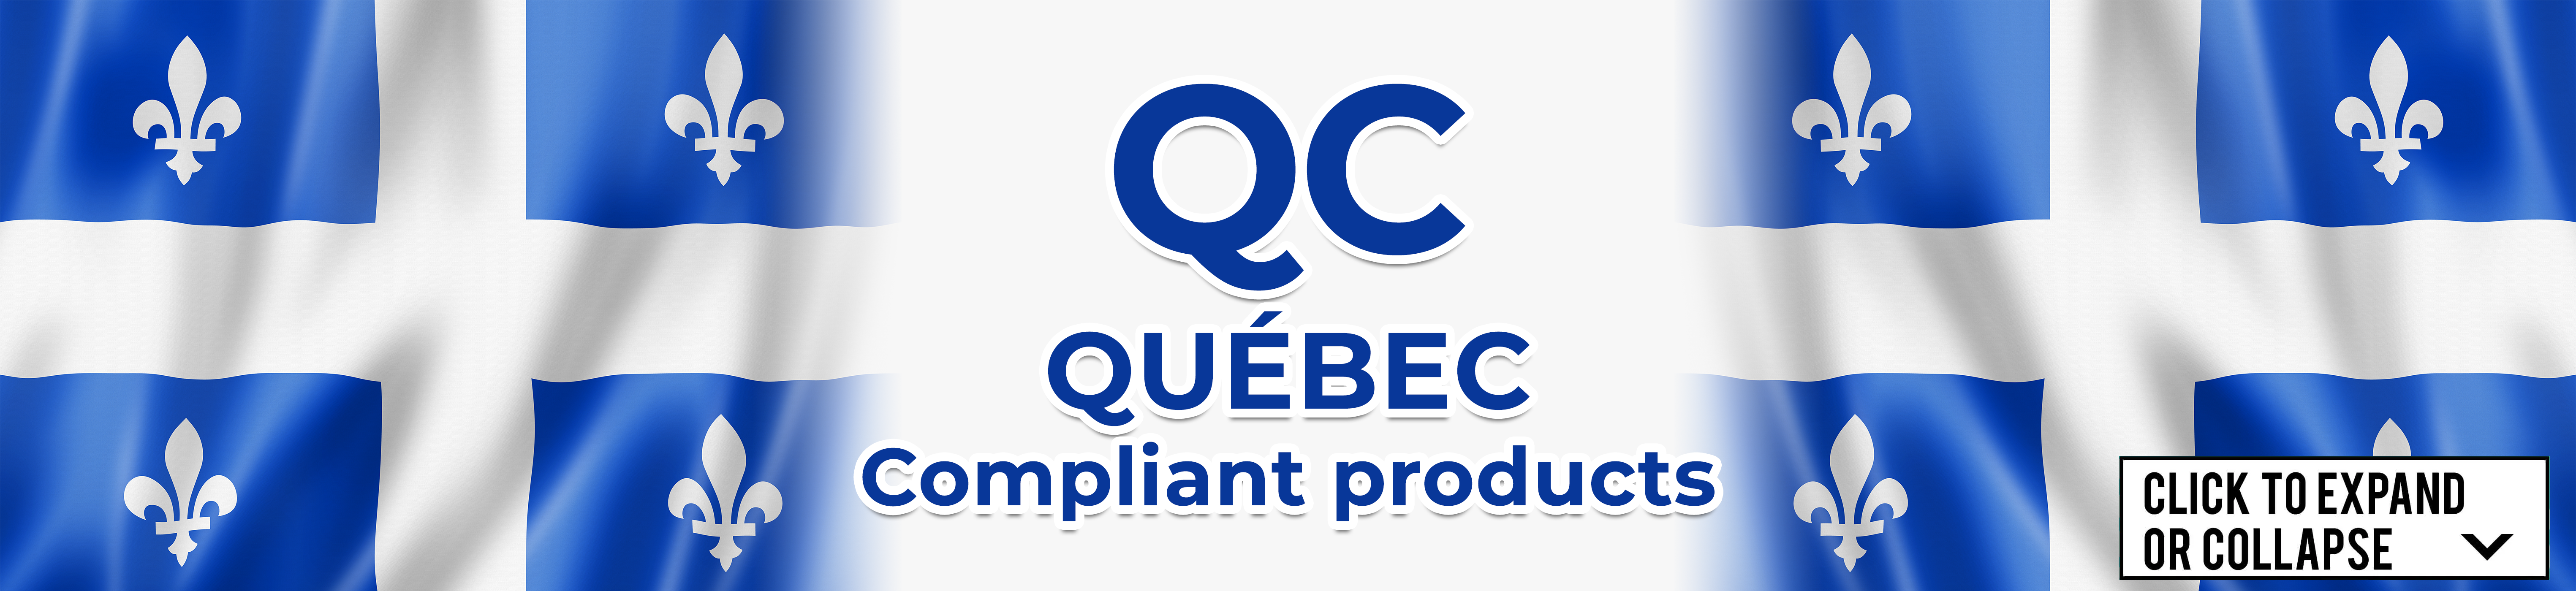 Quebec Compliant